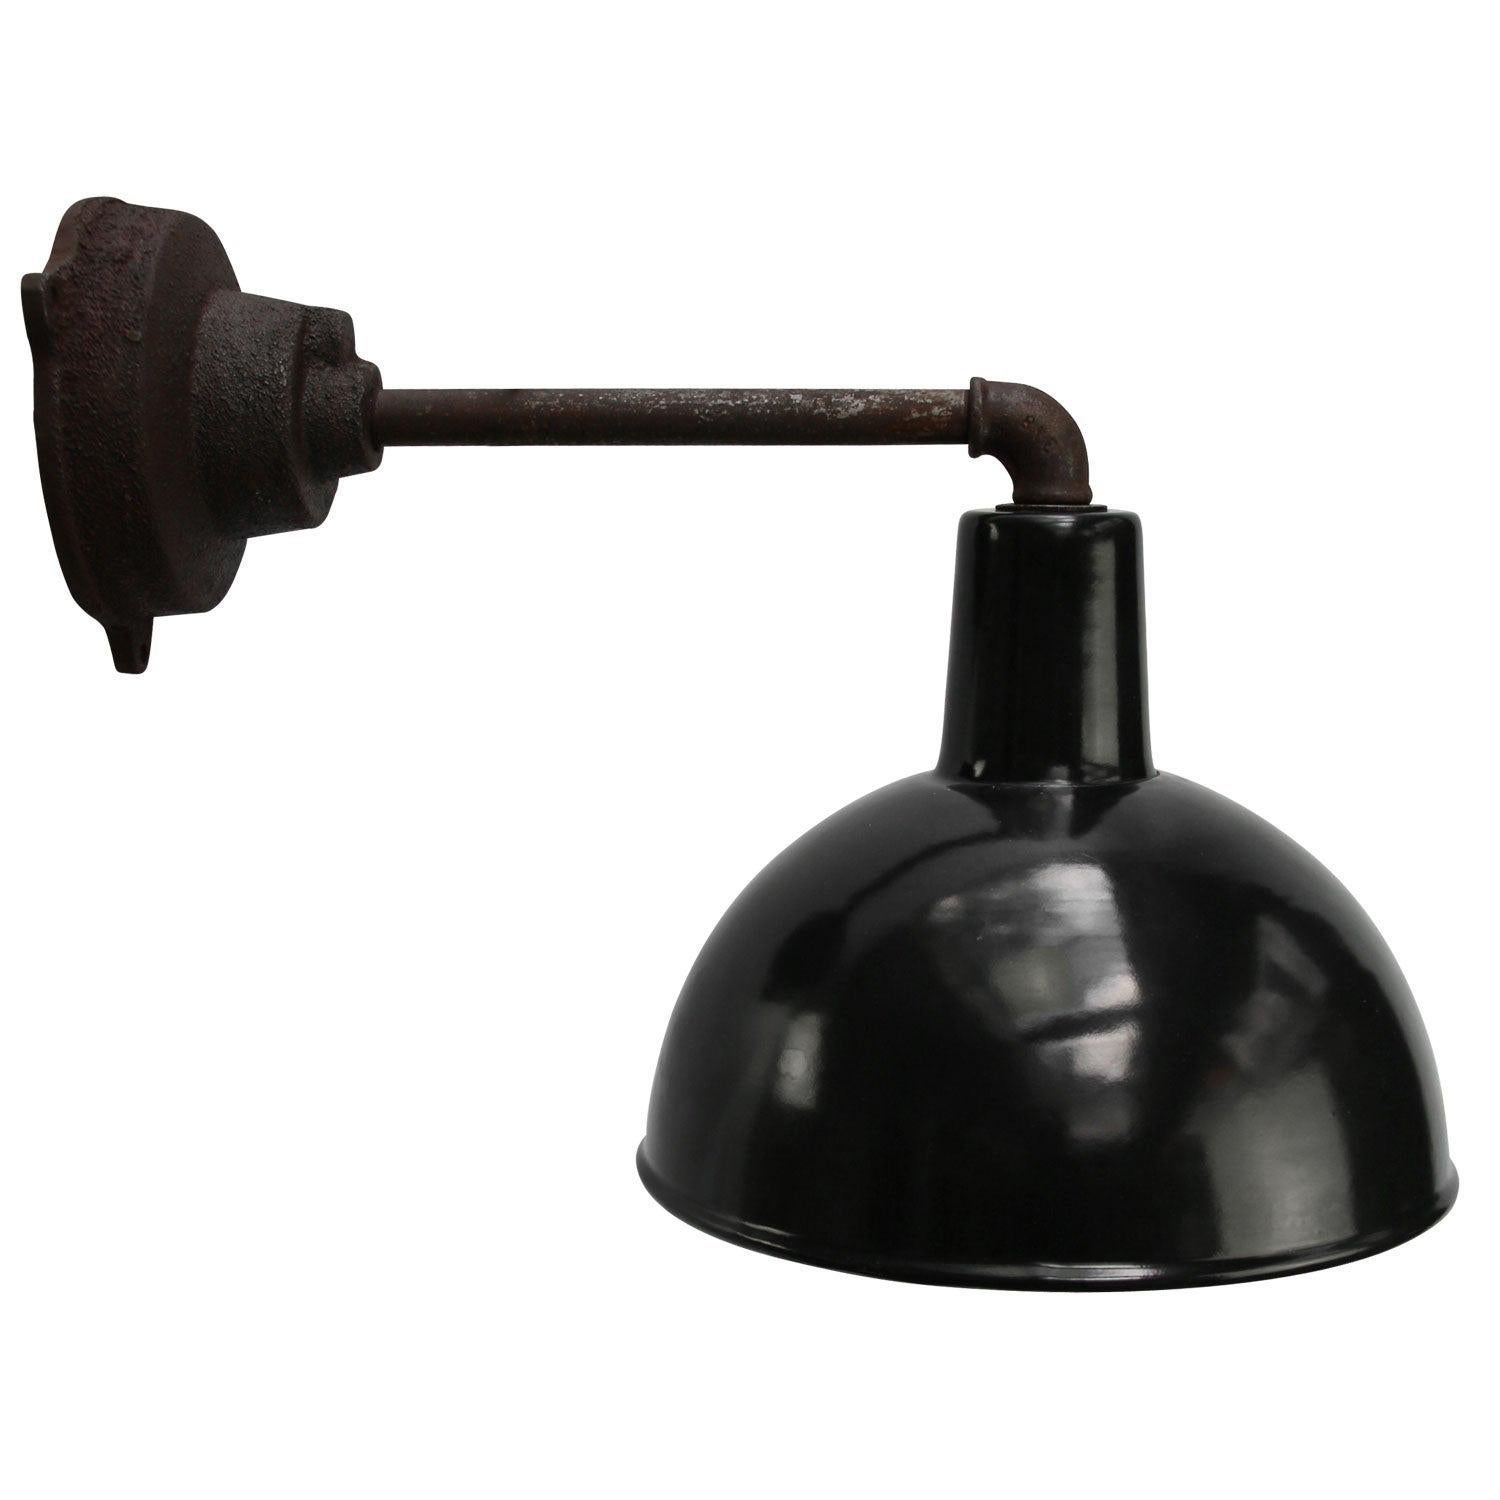 Black Enamel Vintage Industrial Cast Iron Wall Light Scones